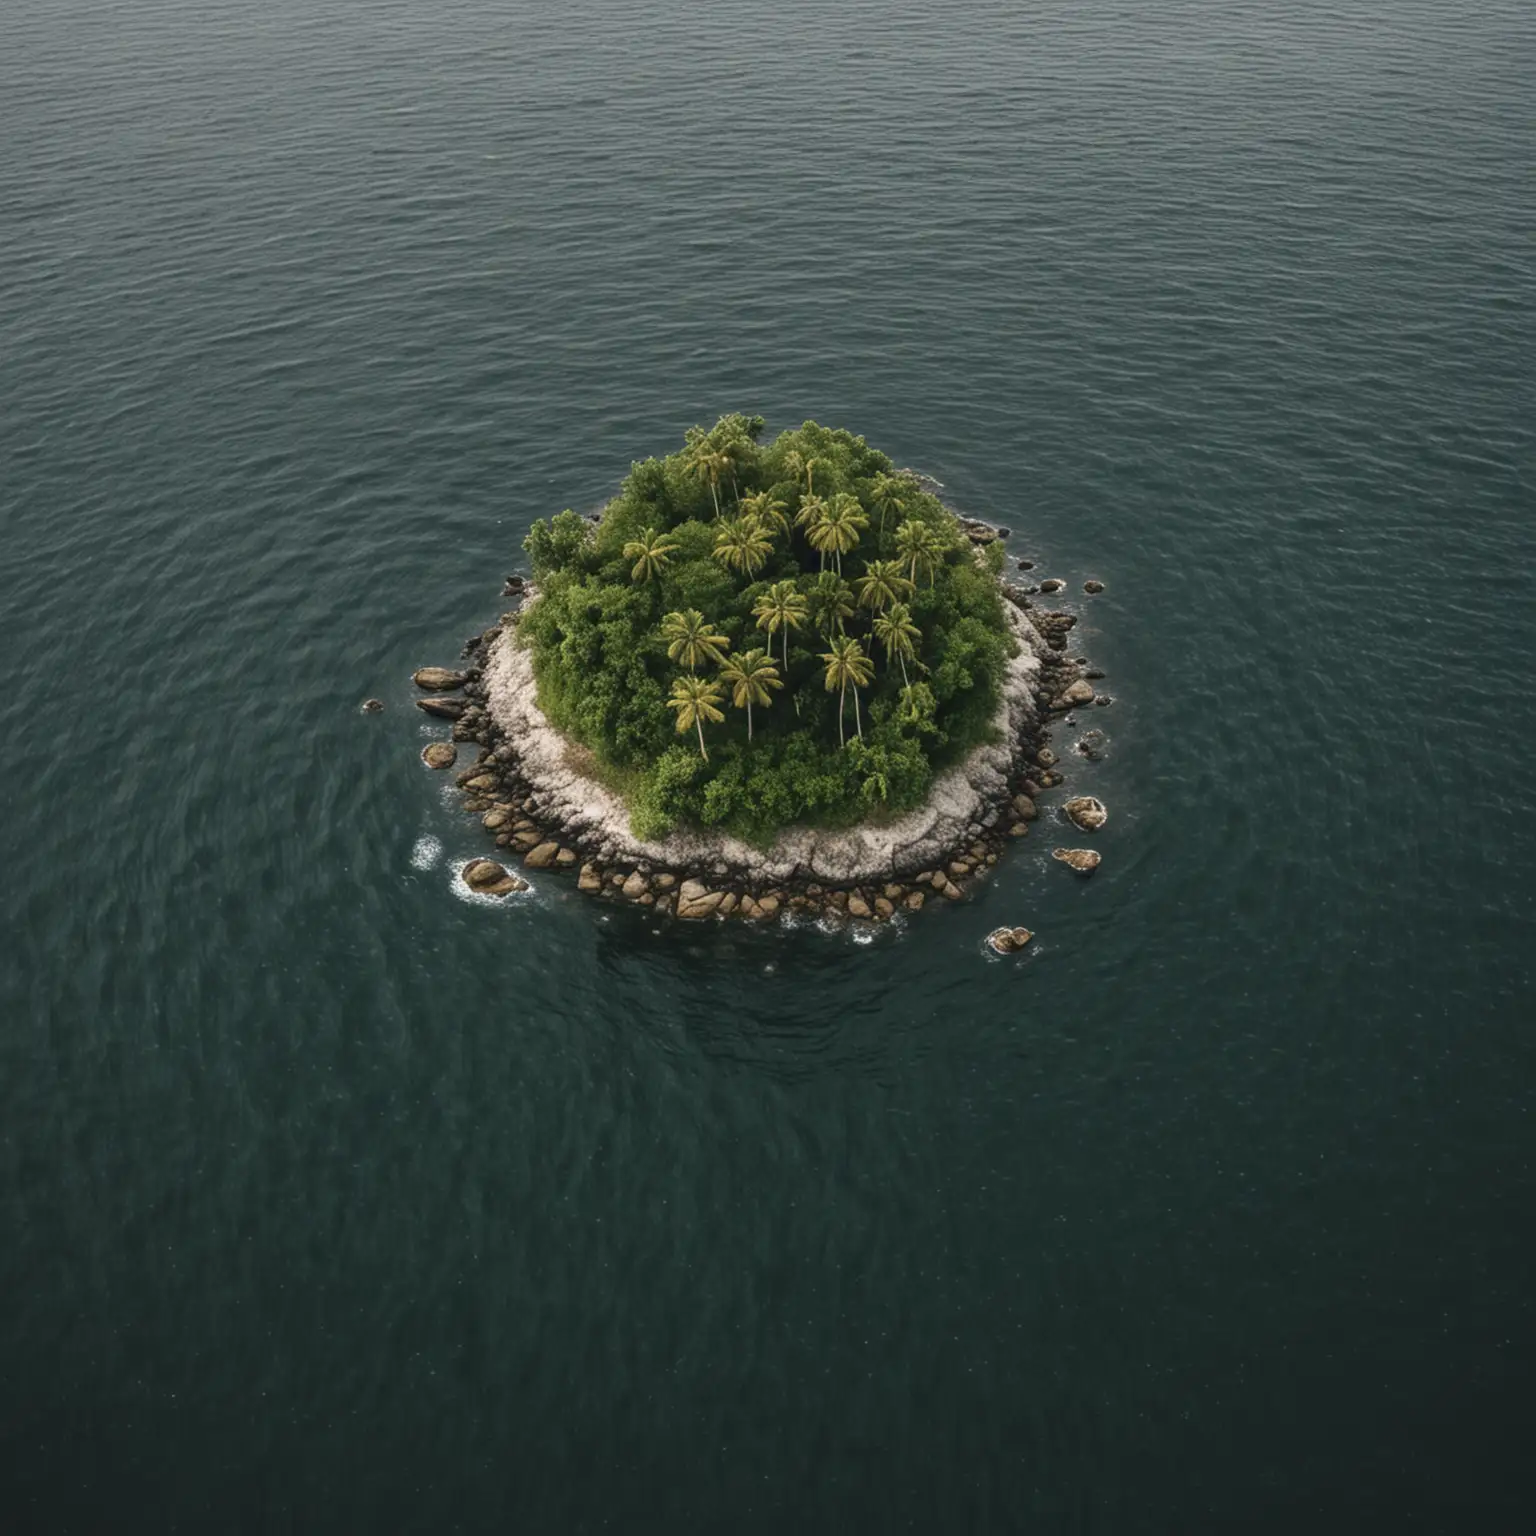 a small island